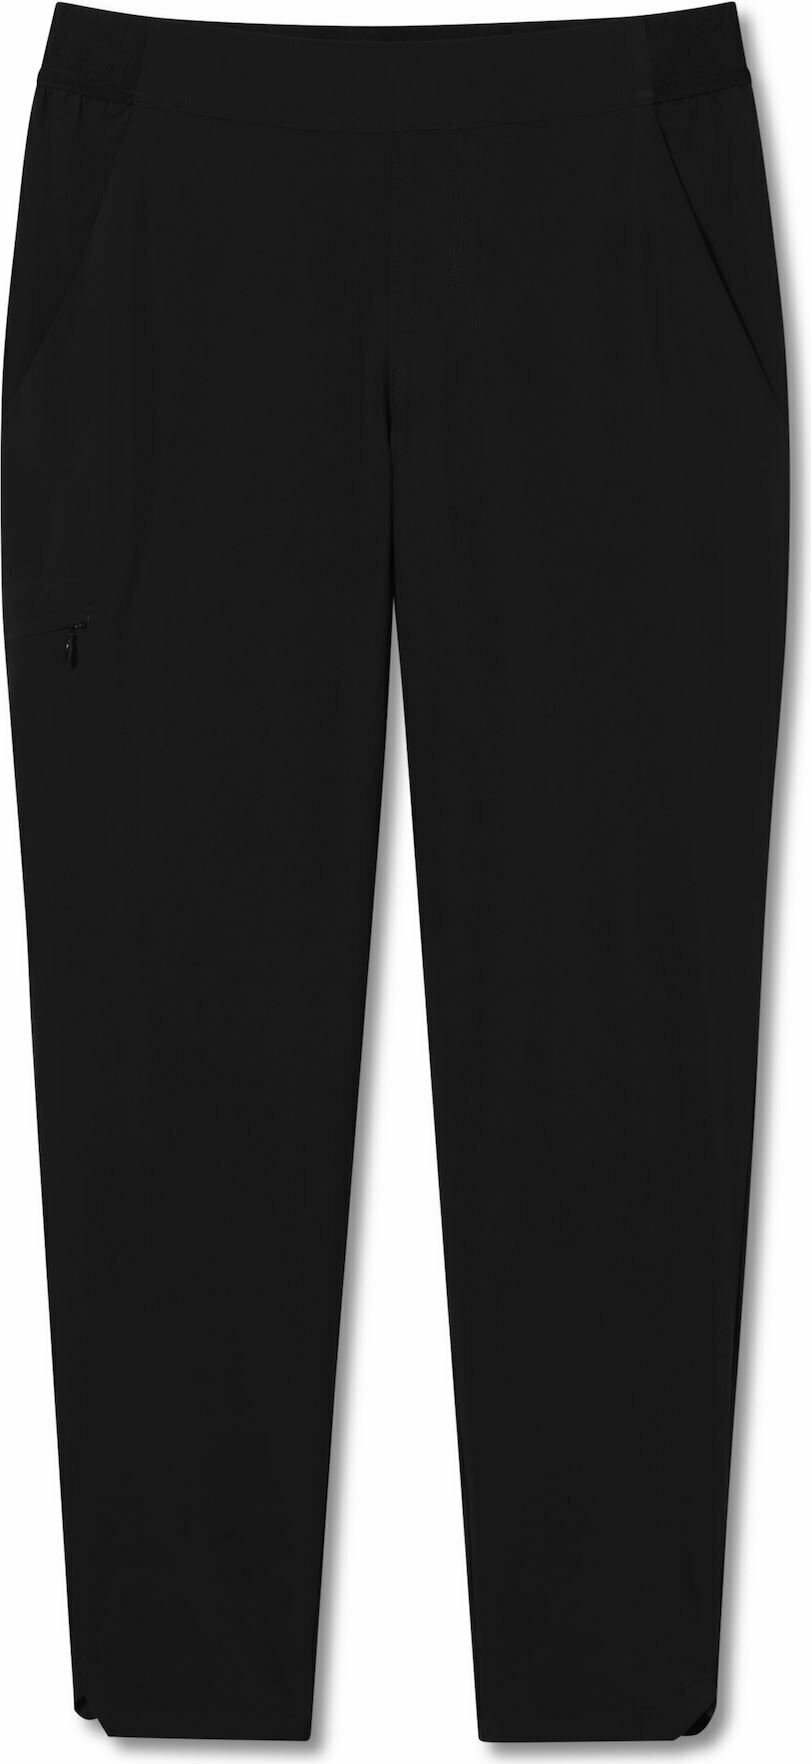 Royal Robbins Spotless Evolution Pant | De hombres pantalones casuales ...